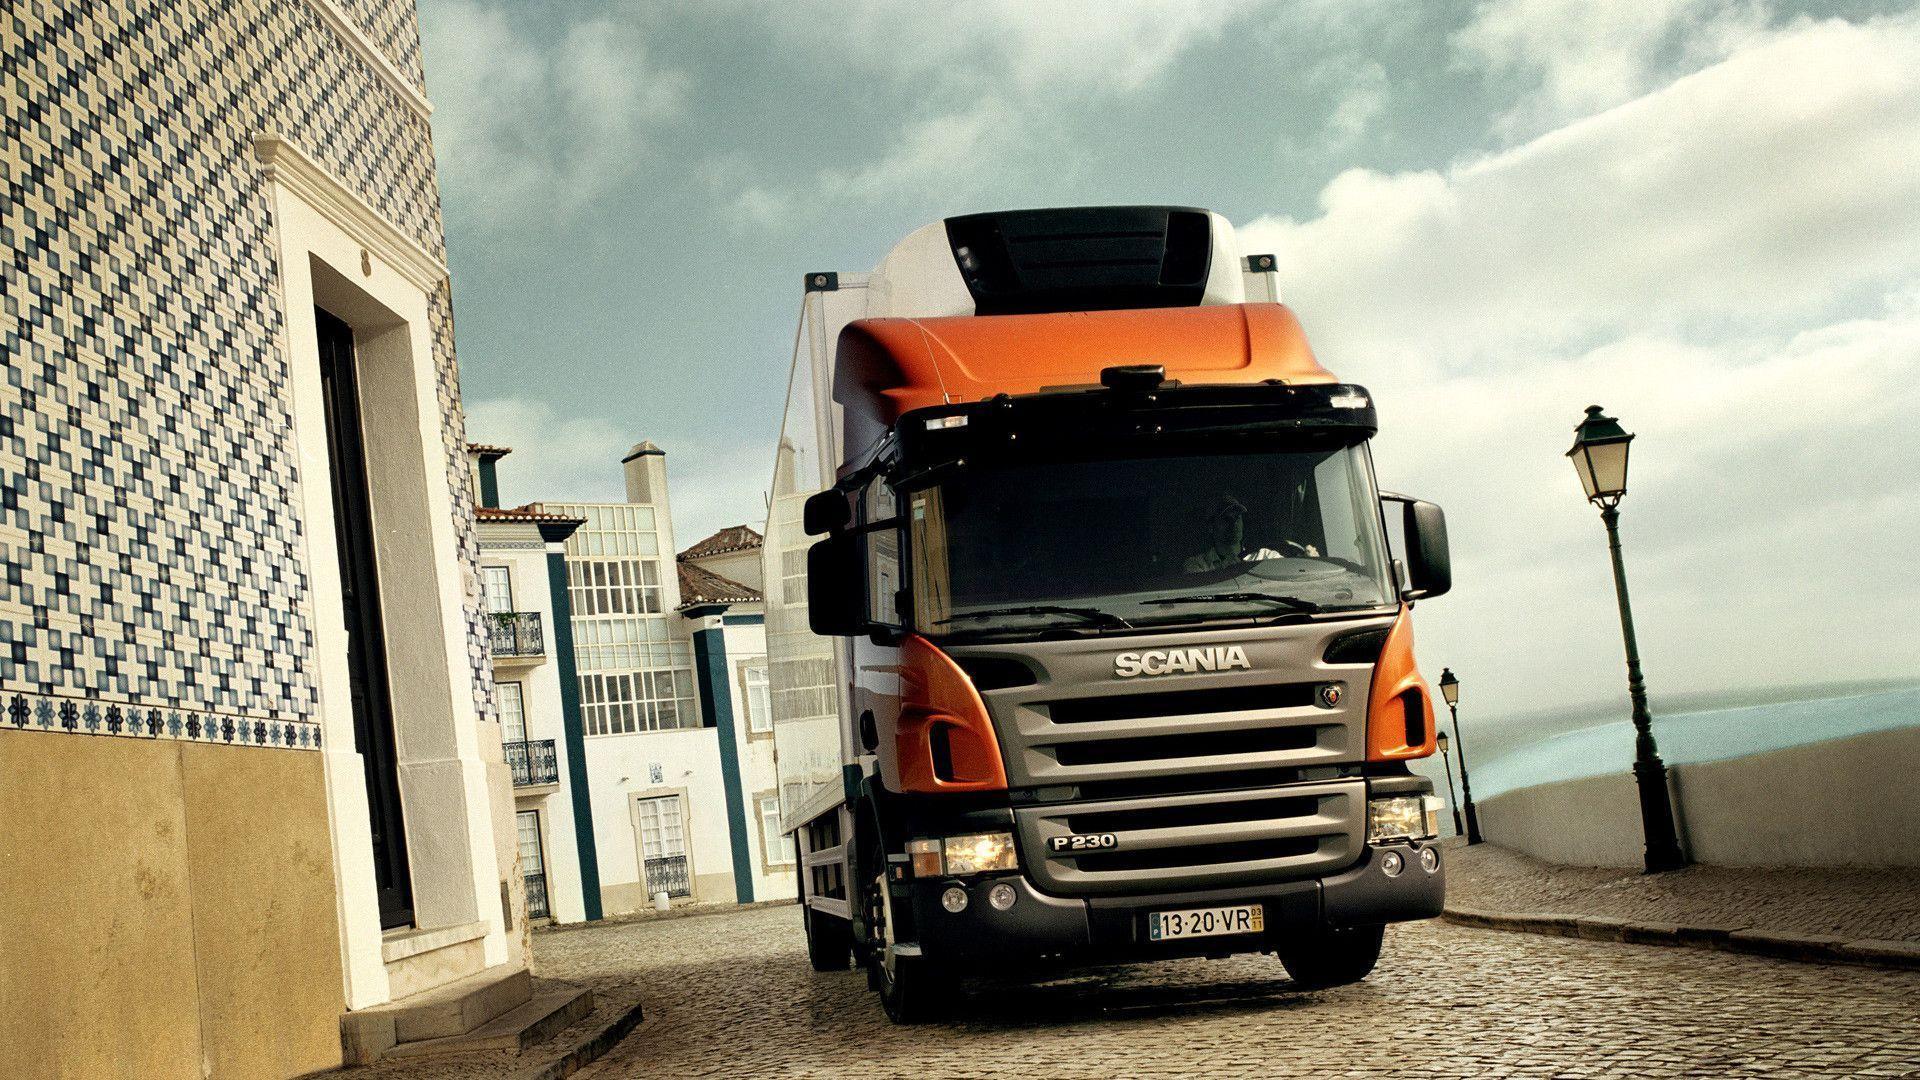 Scania Truck Wallpaper